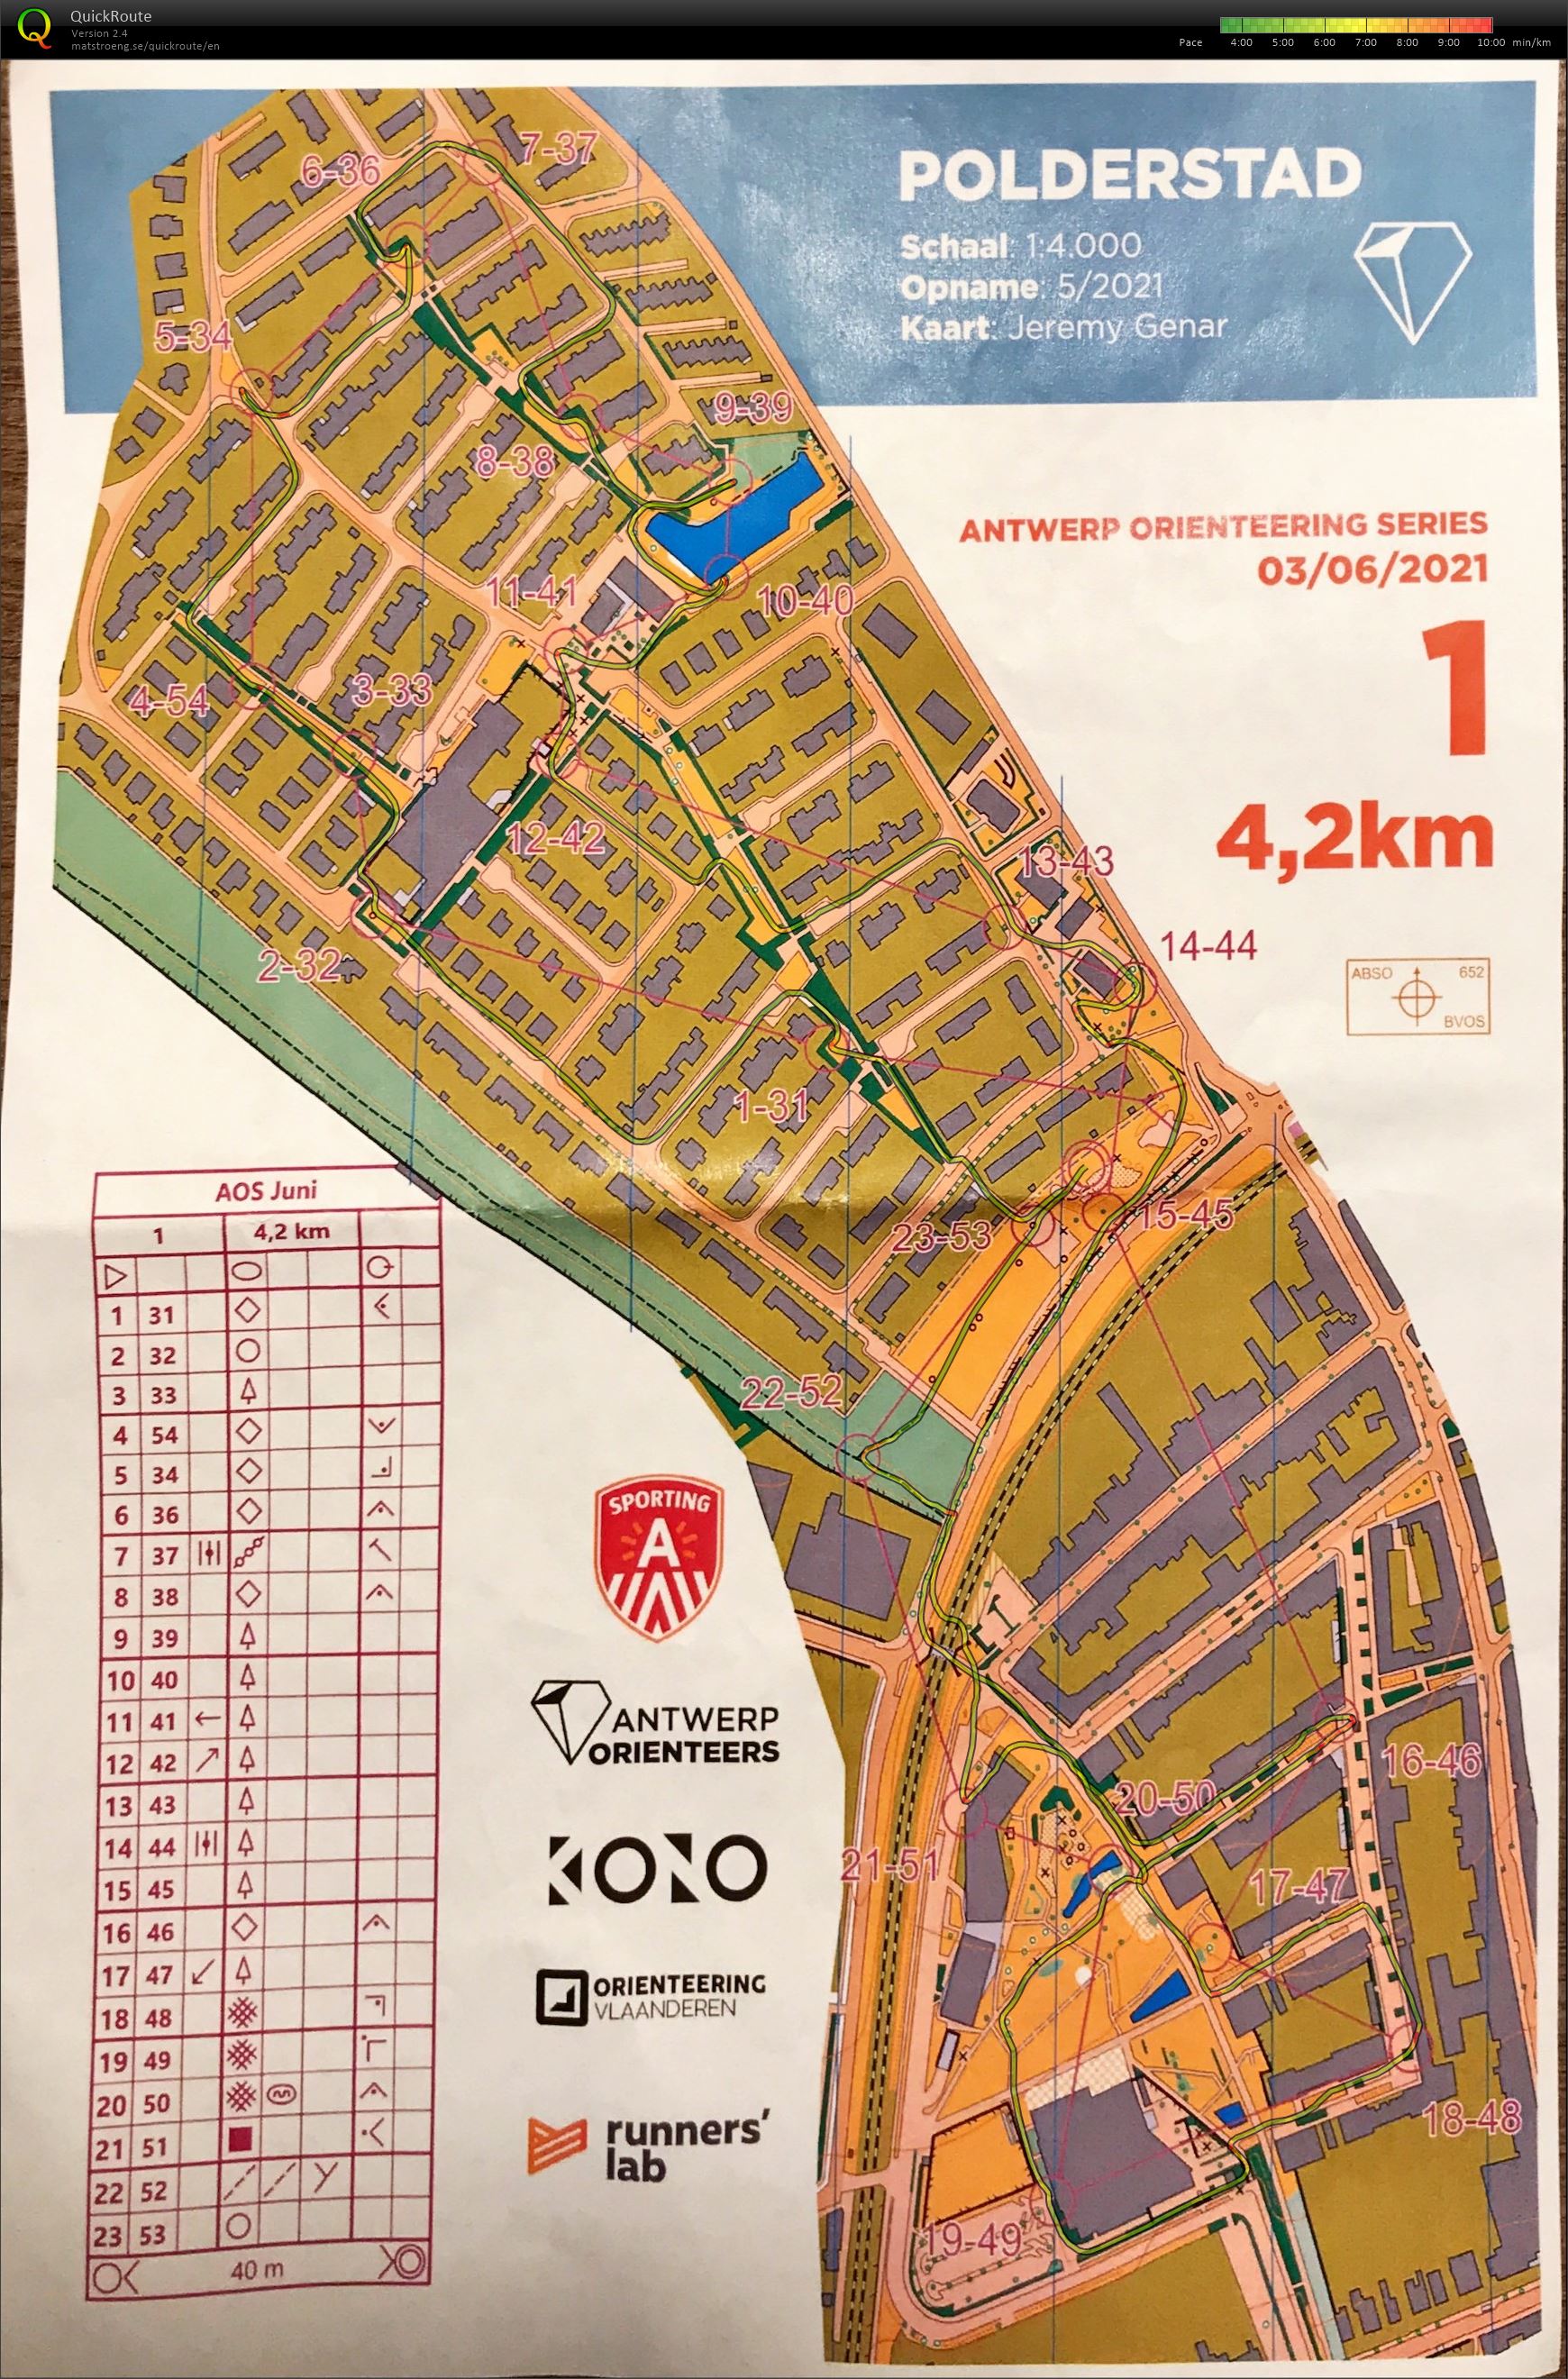 Antwerp Orienteering Series - Polderstad - 4.2K (03.06.2021)